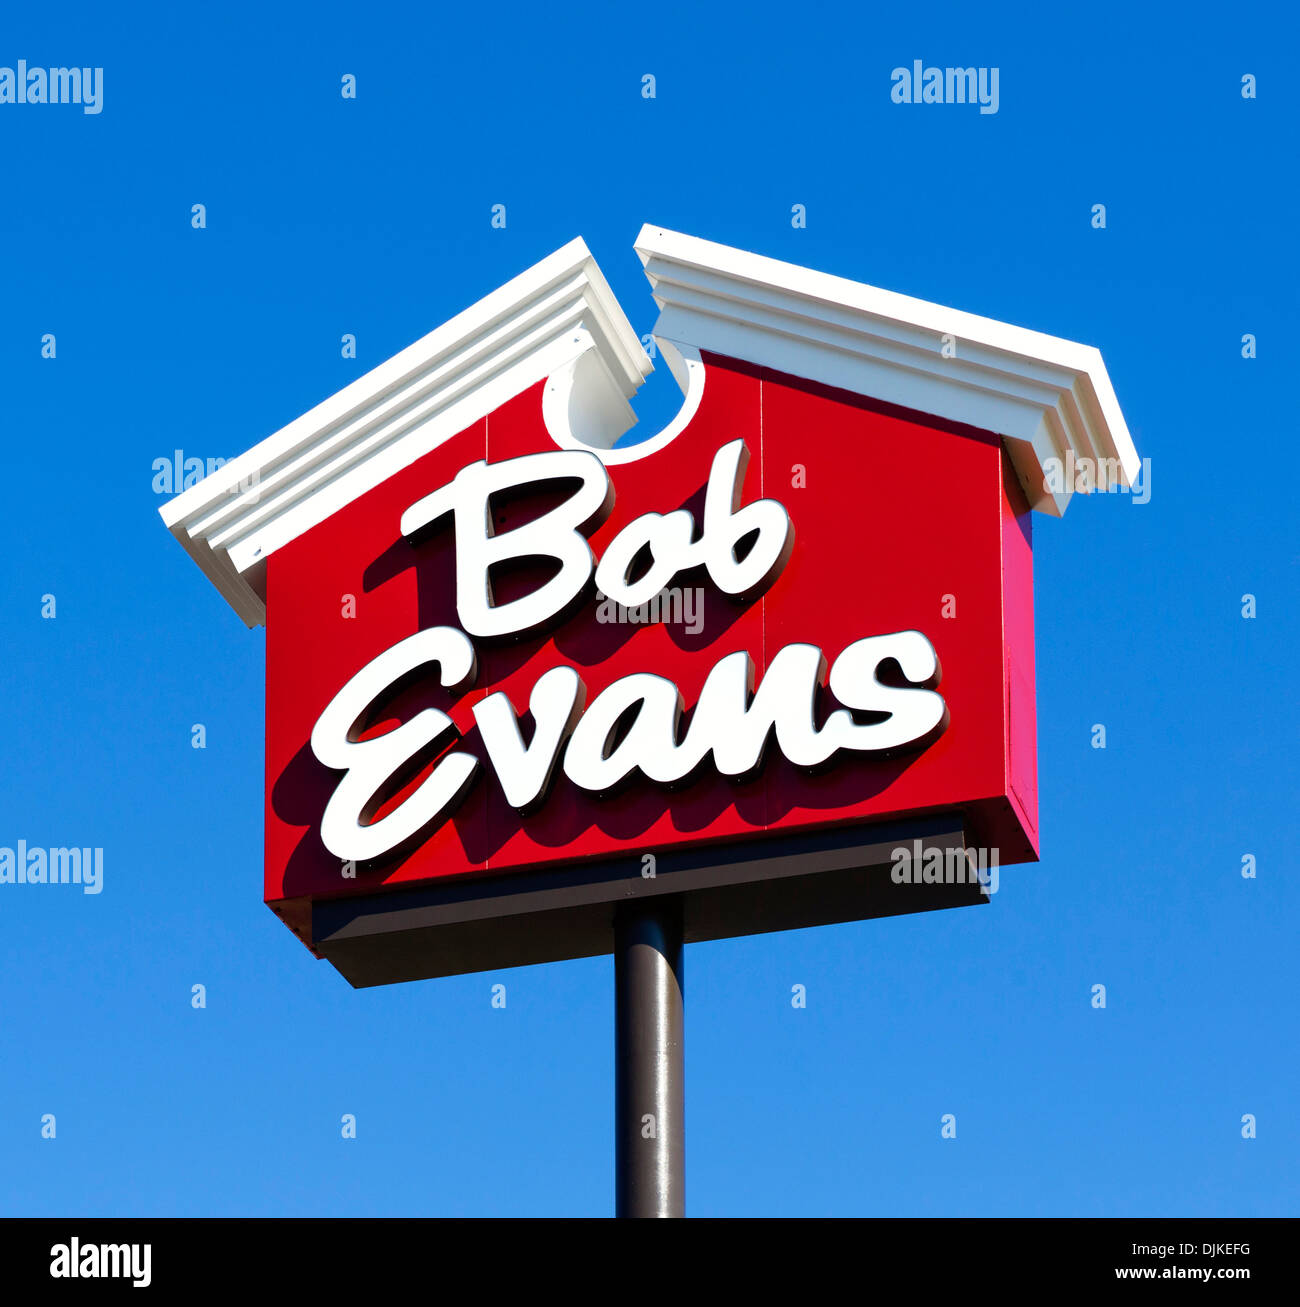 Bob Evans Restaurant Schild, Zentral-Florida, USA Stockfoto